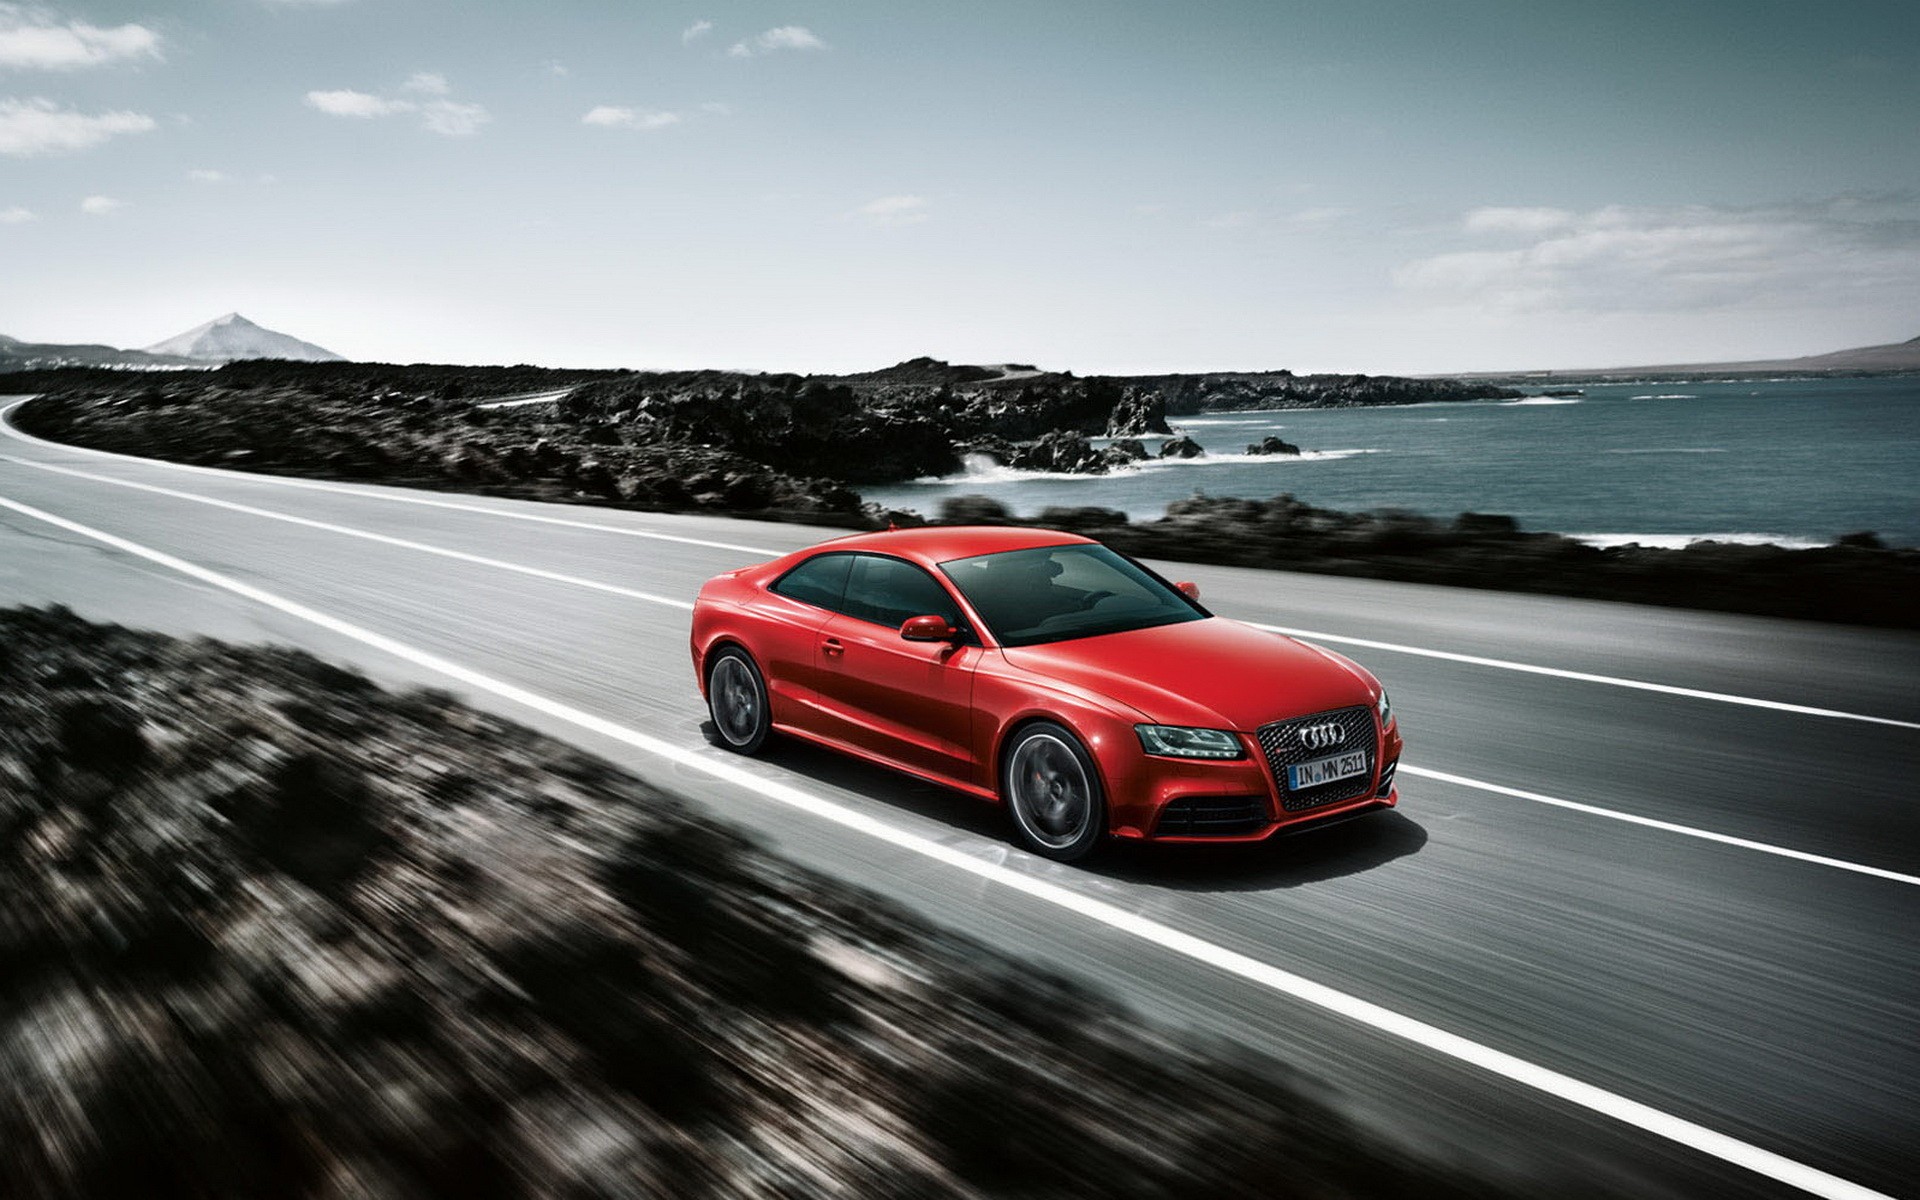 Едет красная машинка. Audi rs5 Red. Audi rs5 4.2. Ауди rs5 Coupe 2011. Audi rs5 rest.